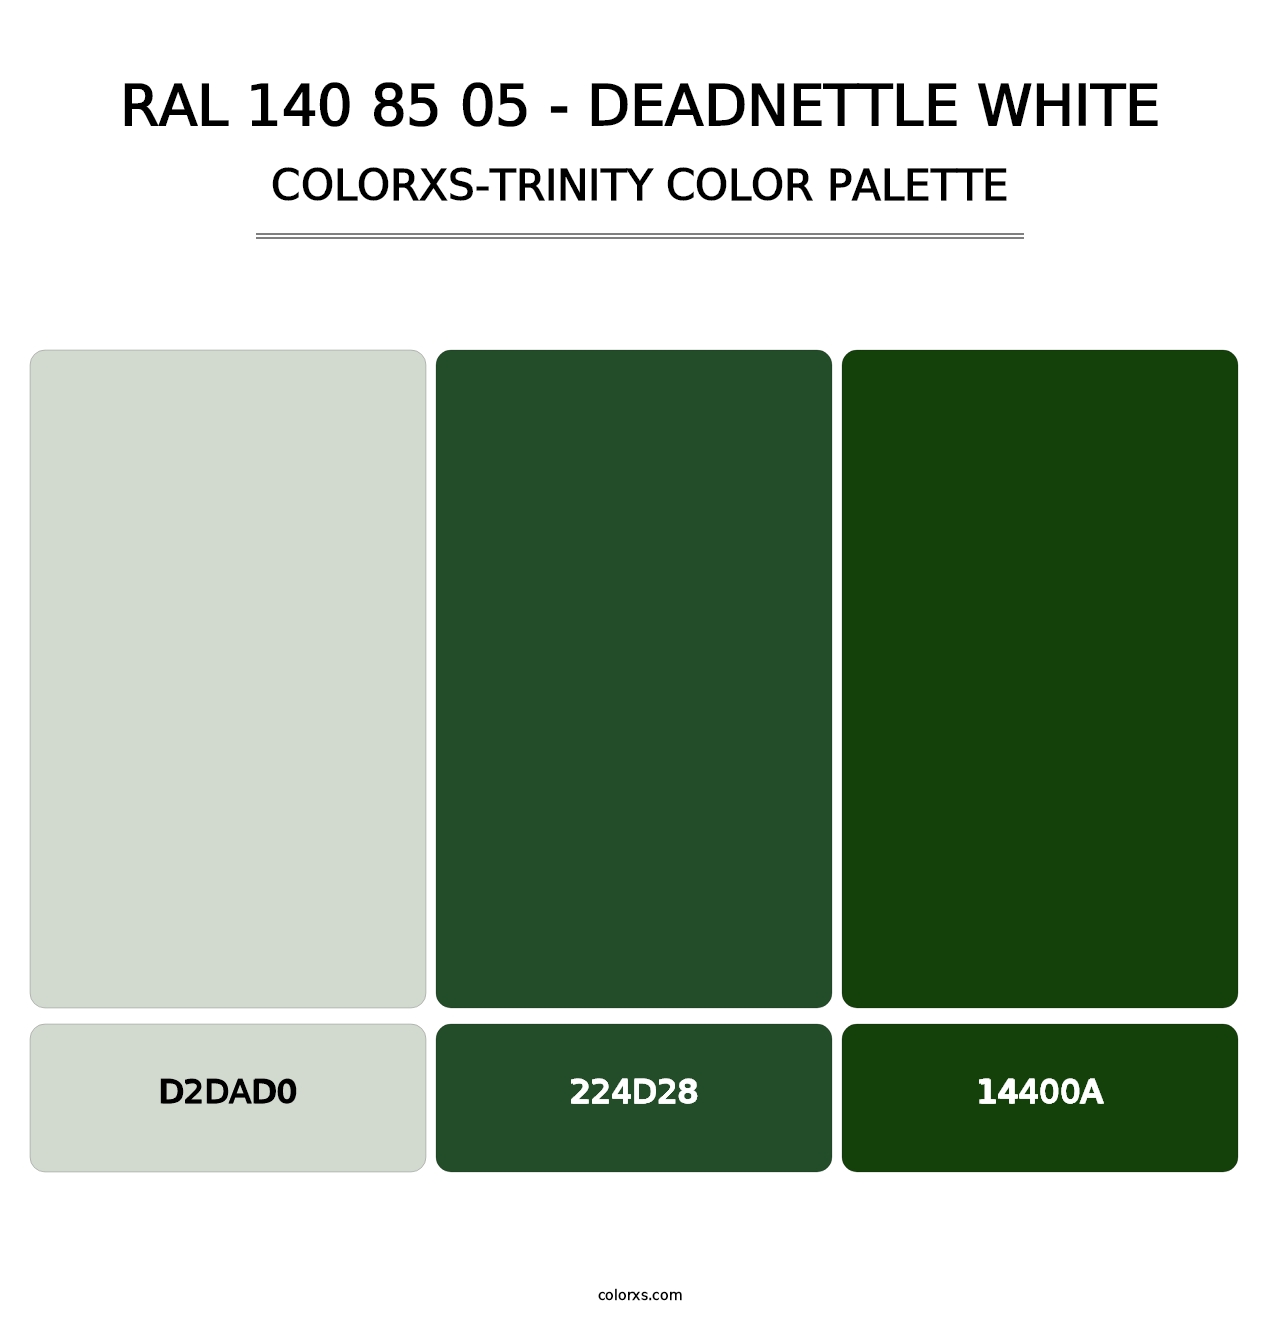 RAL 140 85 05 - Deadnettle White - Colorxs Trinity Palette